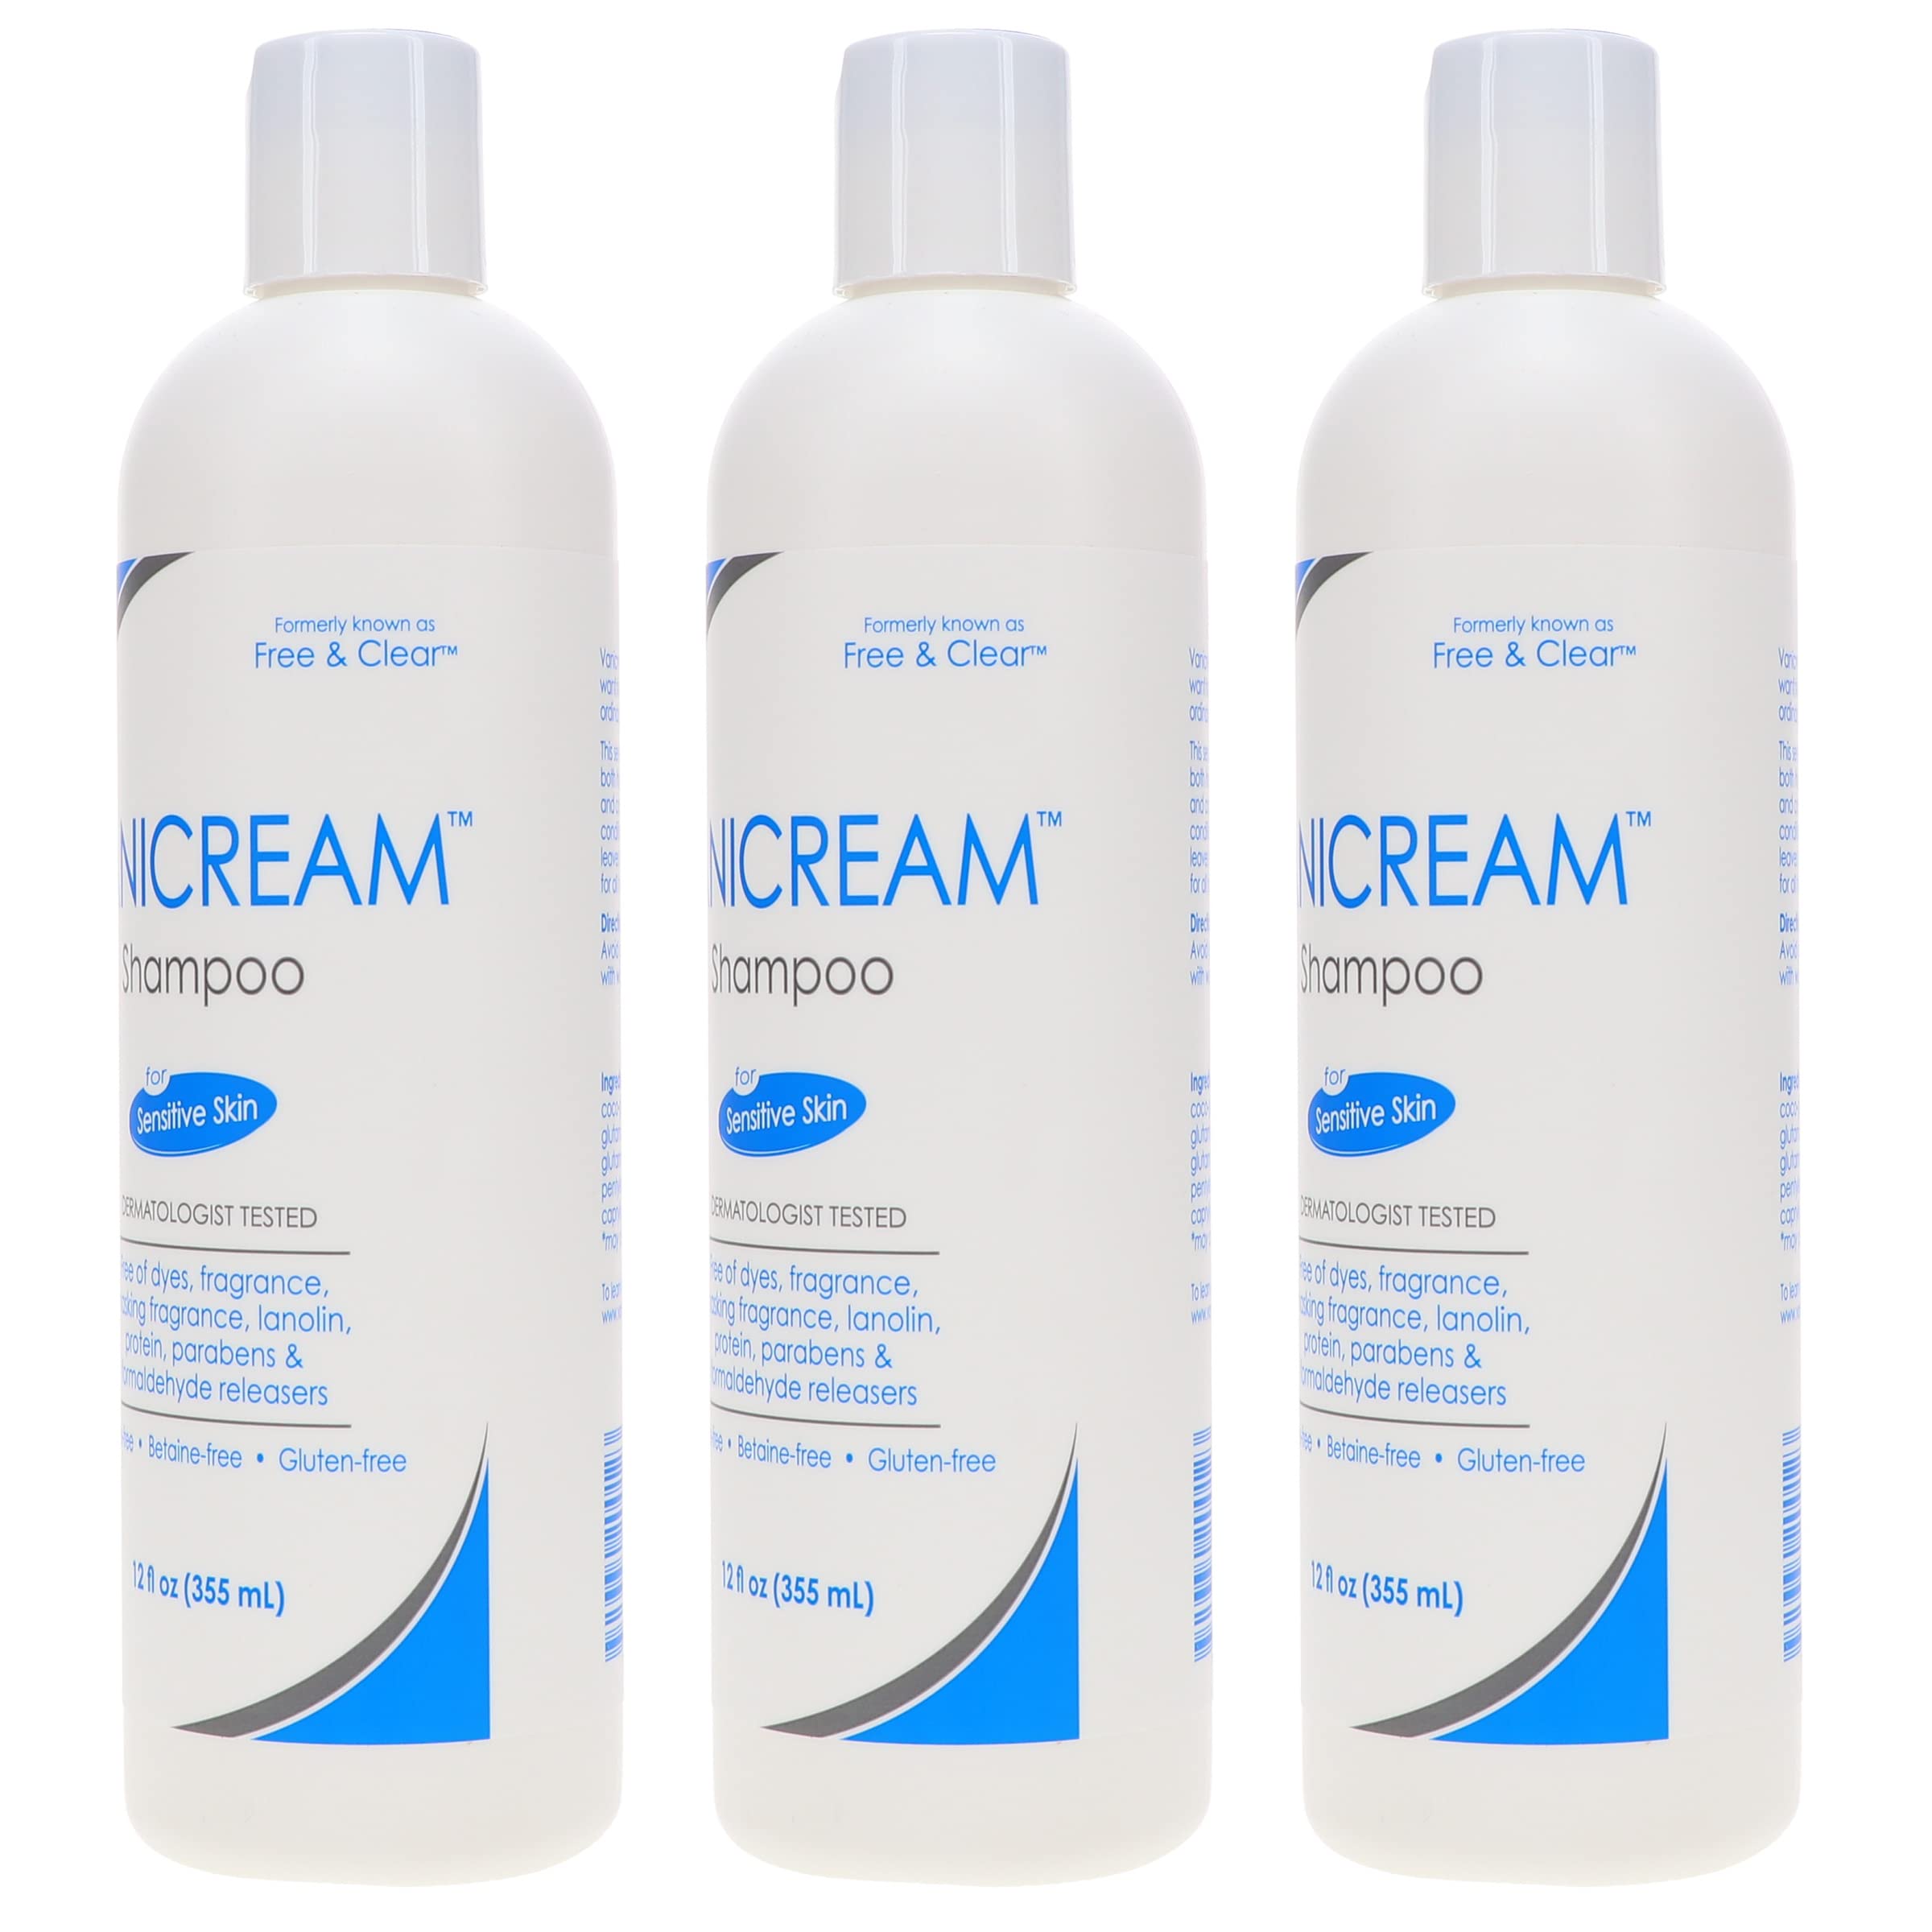 Vanicream Shampoo For Sensitive Skin 12 OZ (Pack of 3)